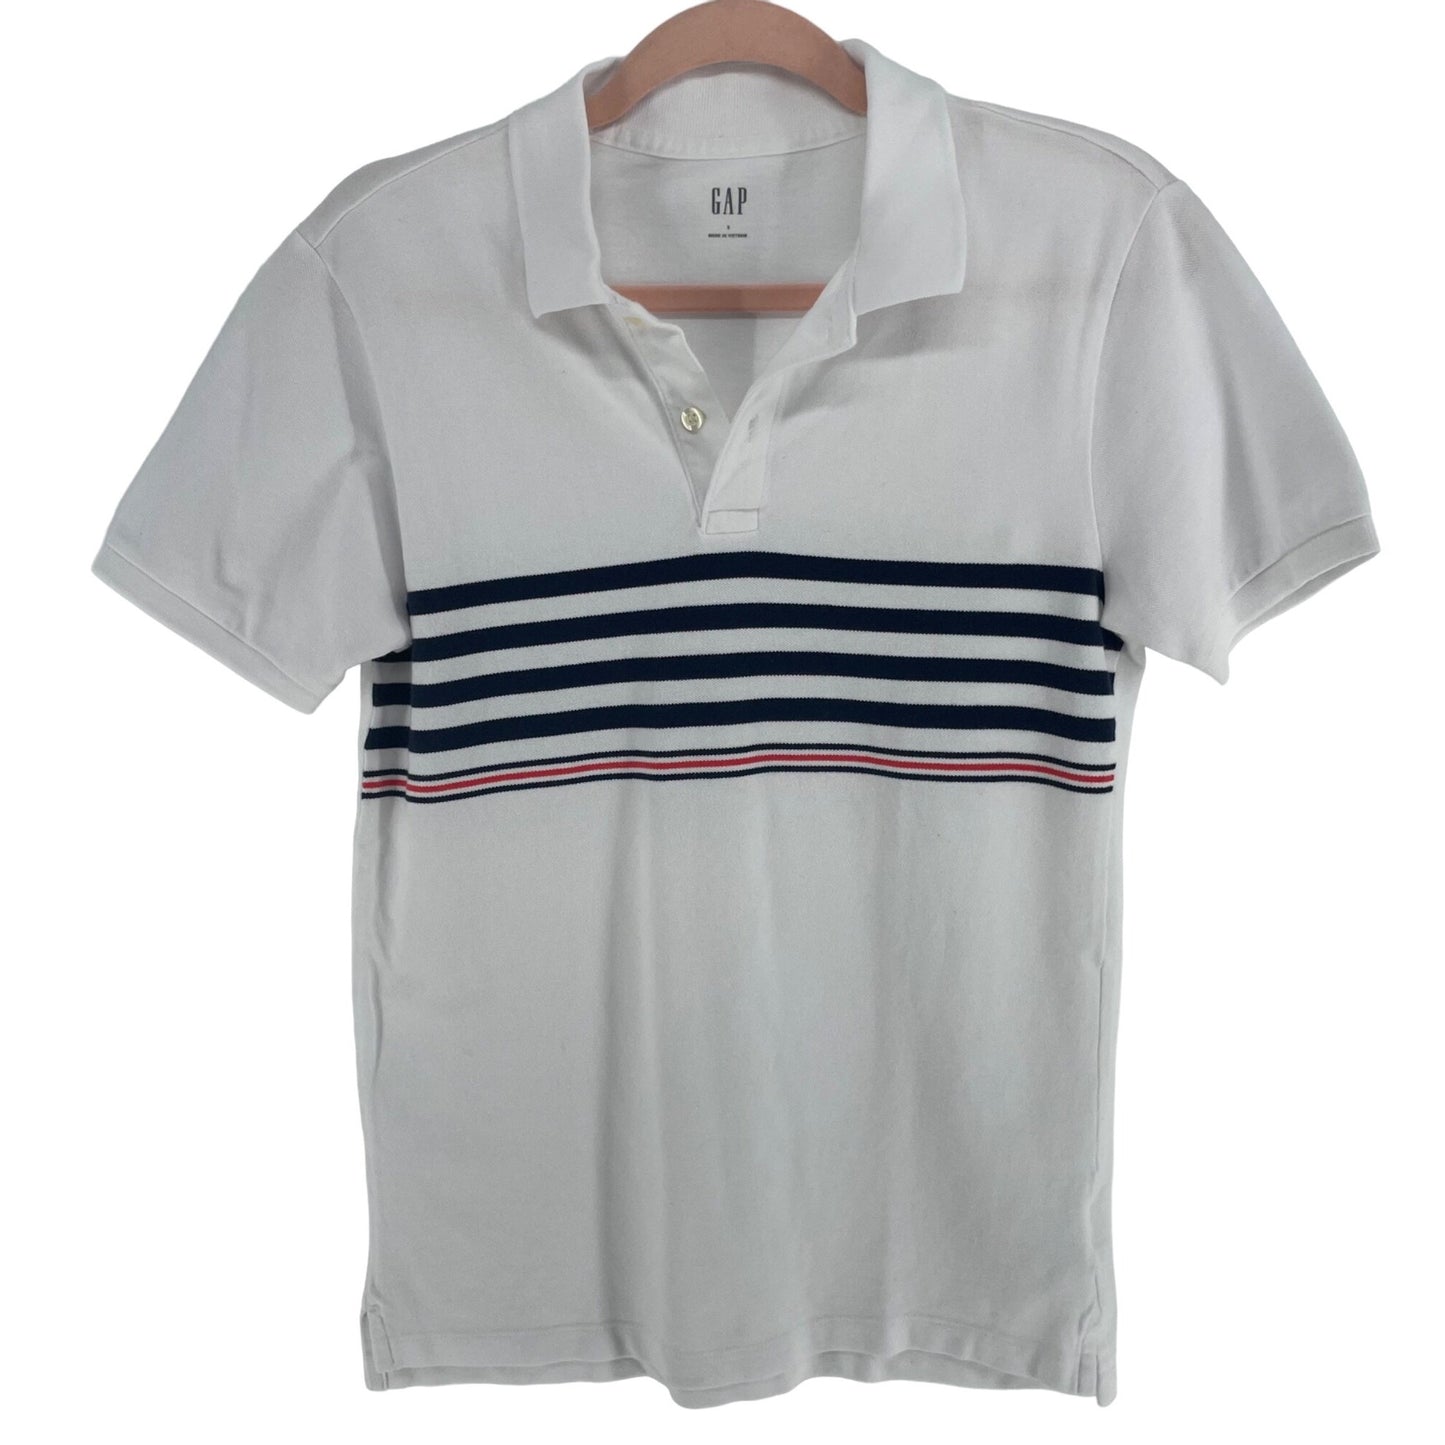 GAP Men's Size Small White/Navy Blue/Orange Striped Polo Shirt